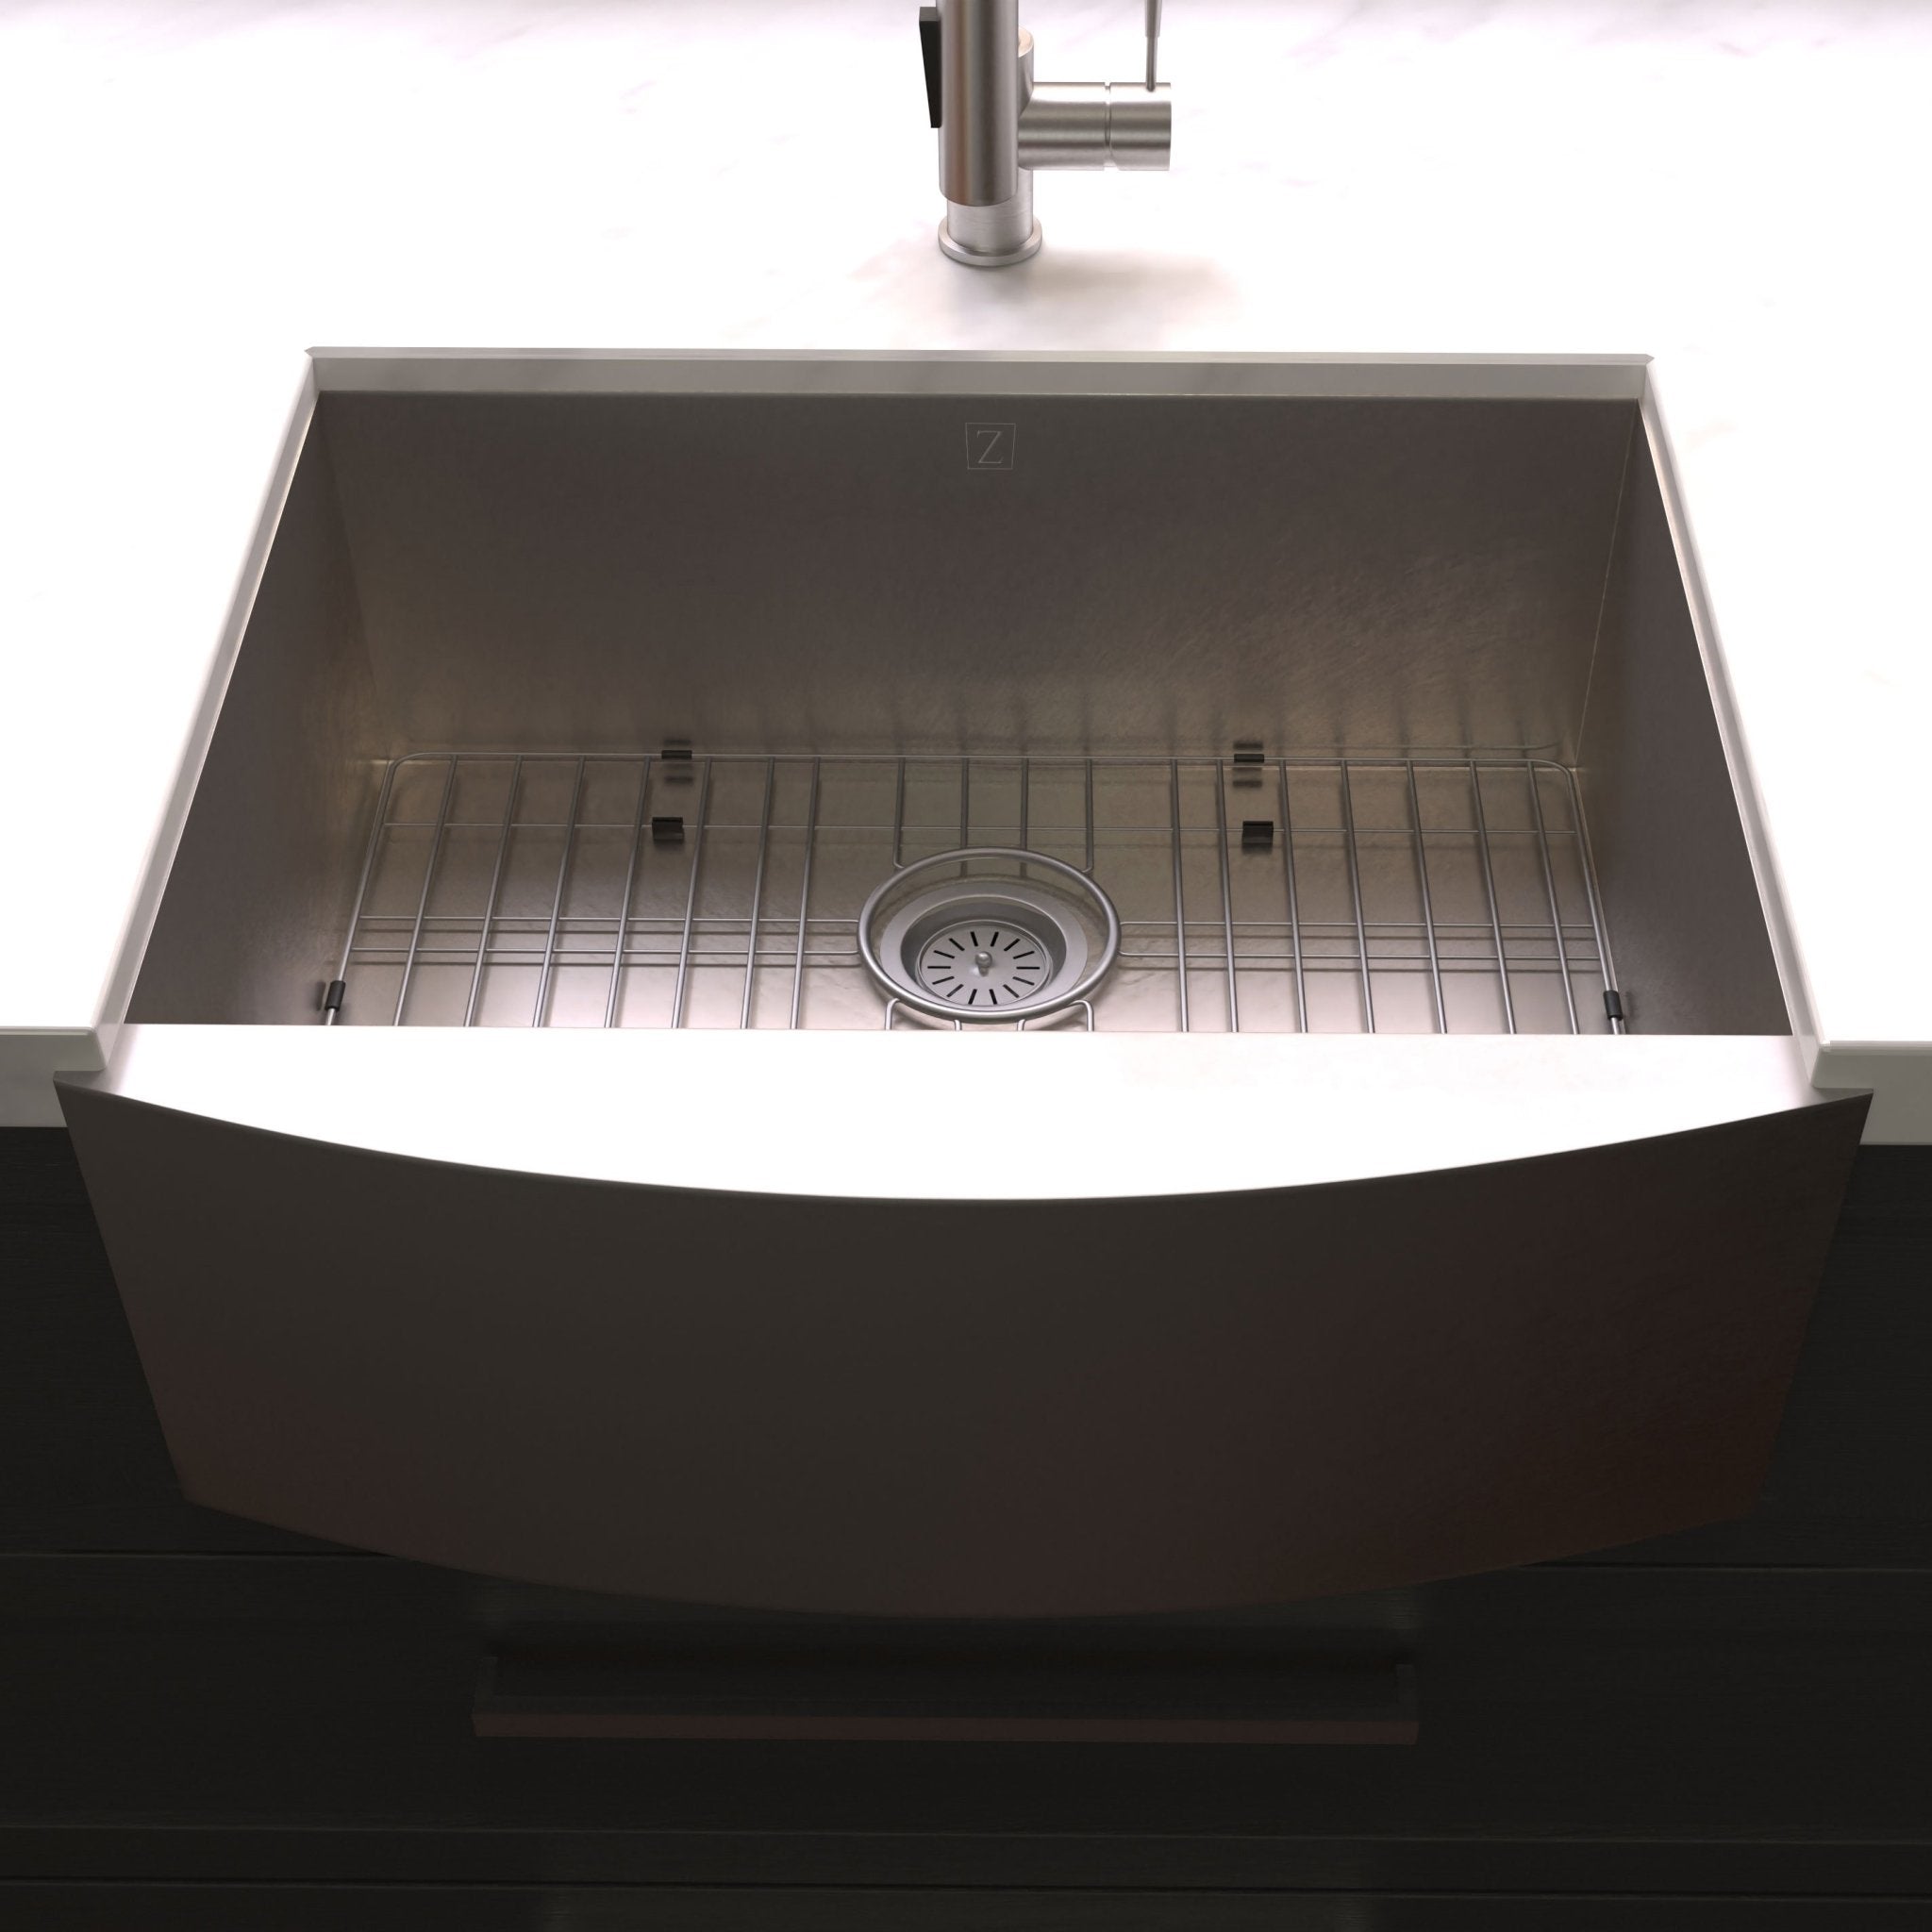 ZLINE 33" Farmhouse Series Undermount Single Bowl Apron Sinks (SAS) - Rustic Kitchen & Bath - Sinks - ZLINE Kitchen and Bath